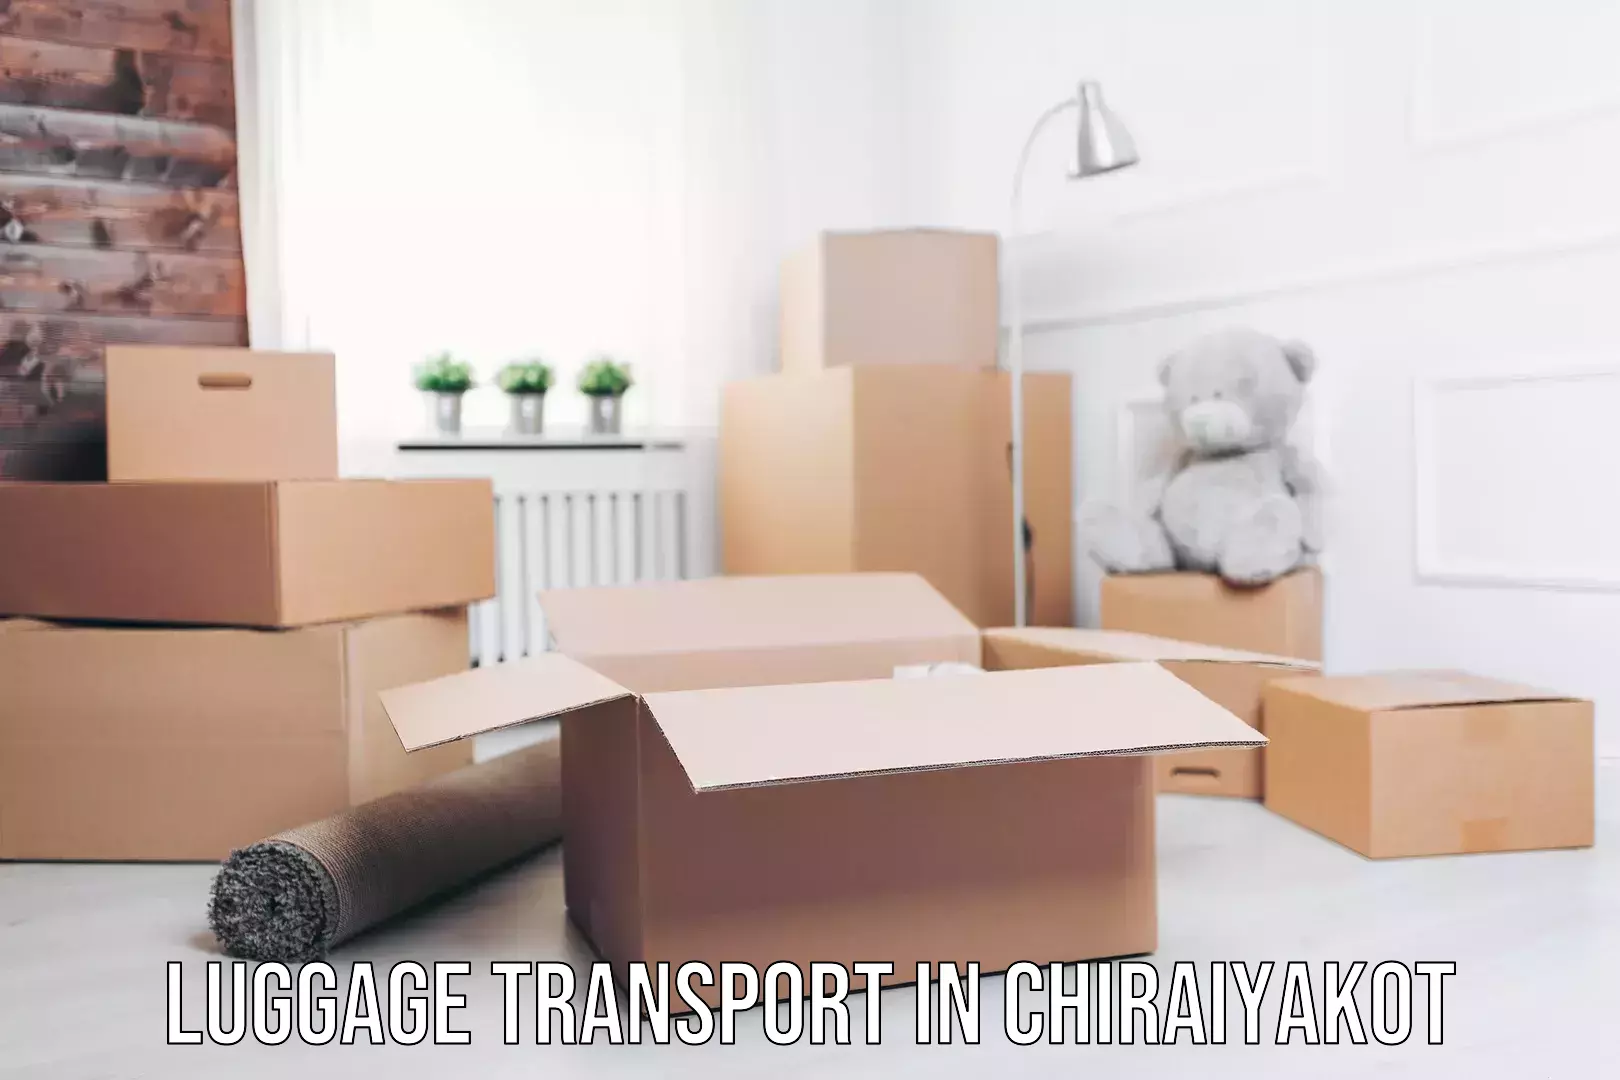 Luggage transport operations in Chiraiyakot